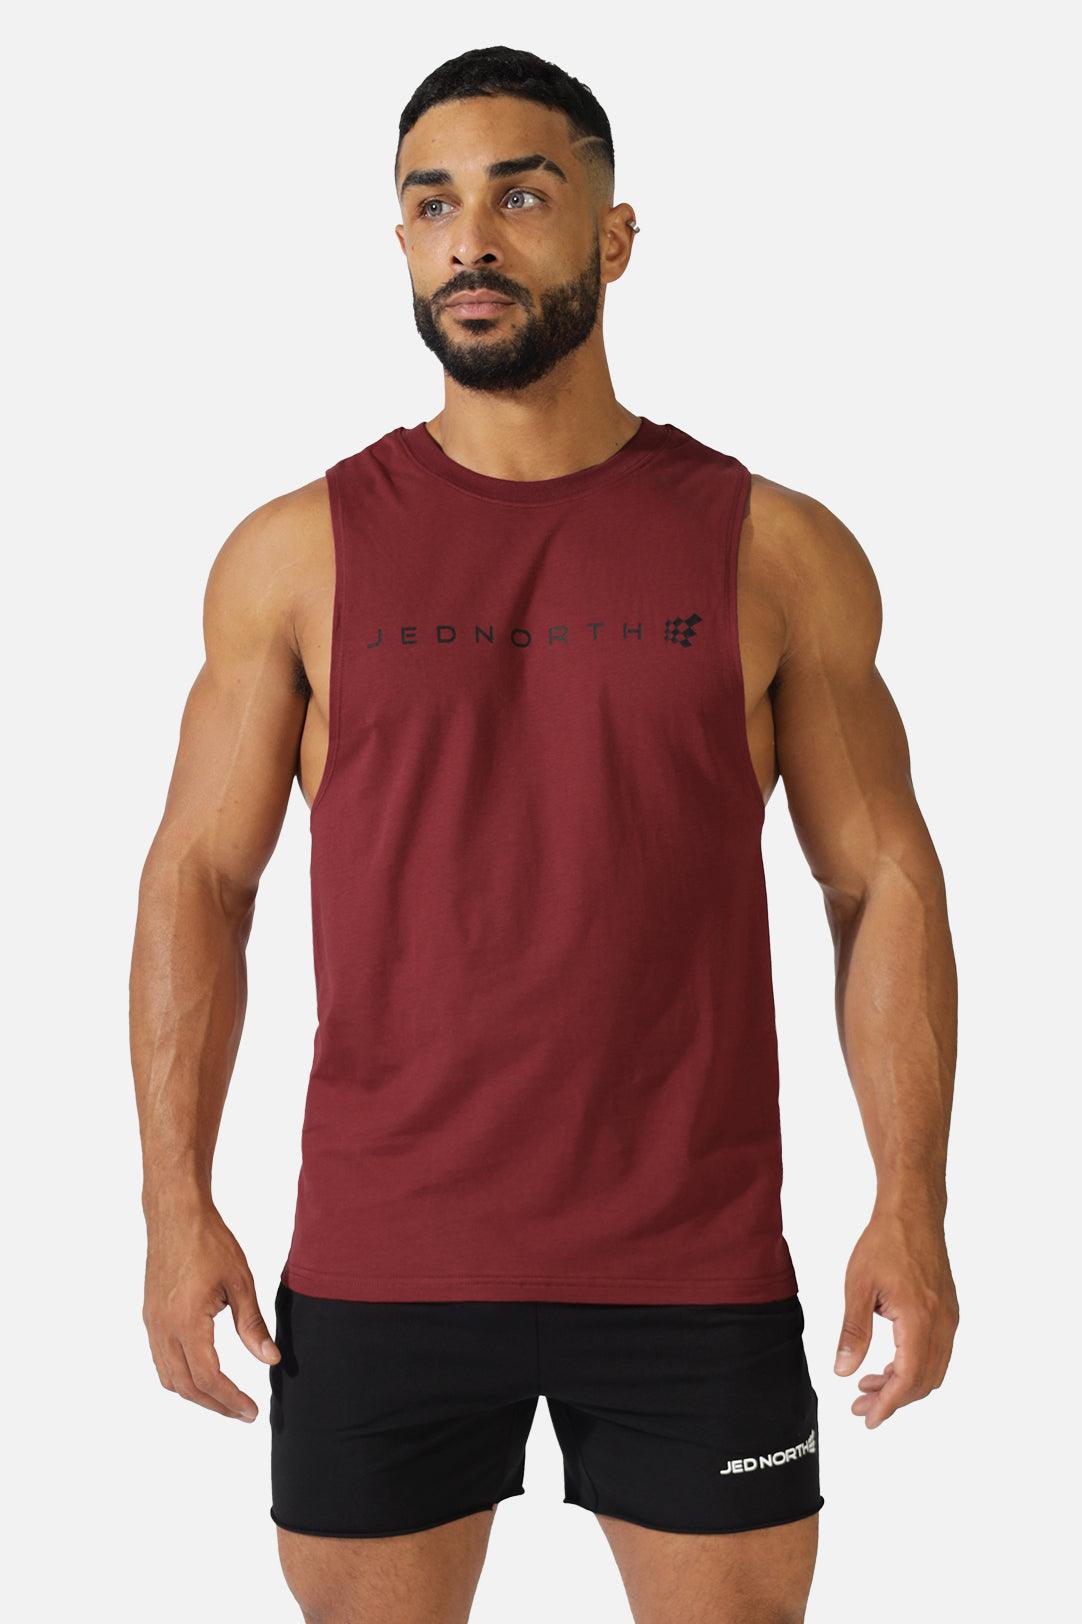 Men's Gym Sleeveless Hoodie Bodybuilding Tank Top Muscle Workout Vest, Wish